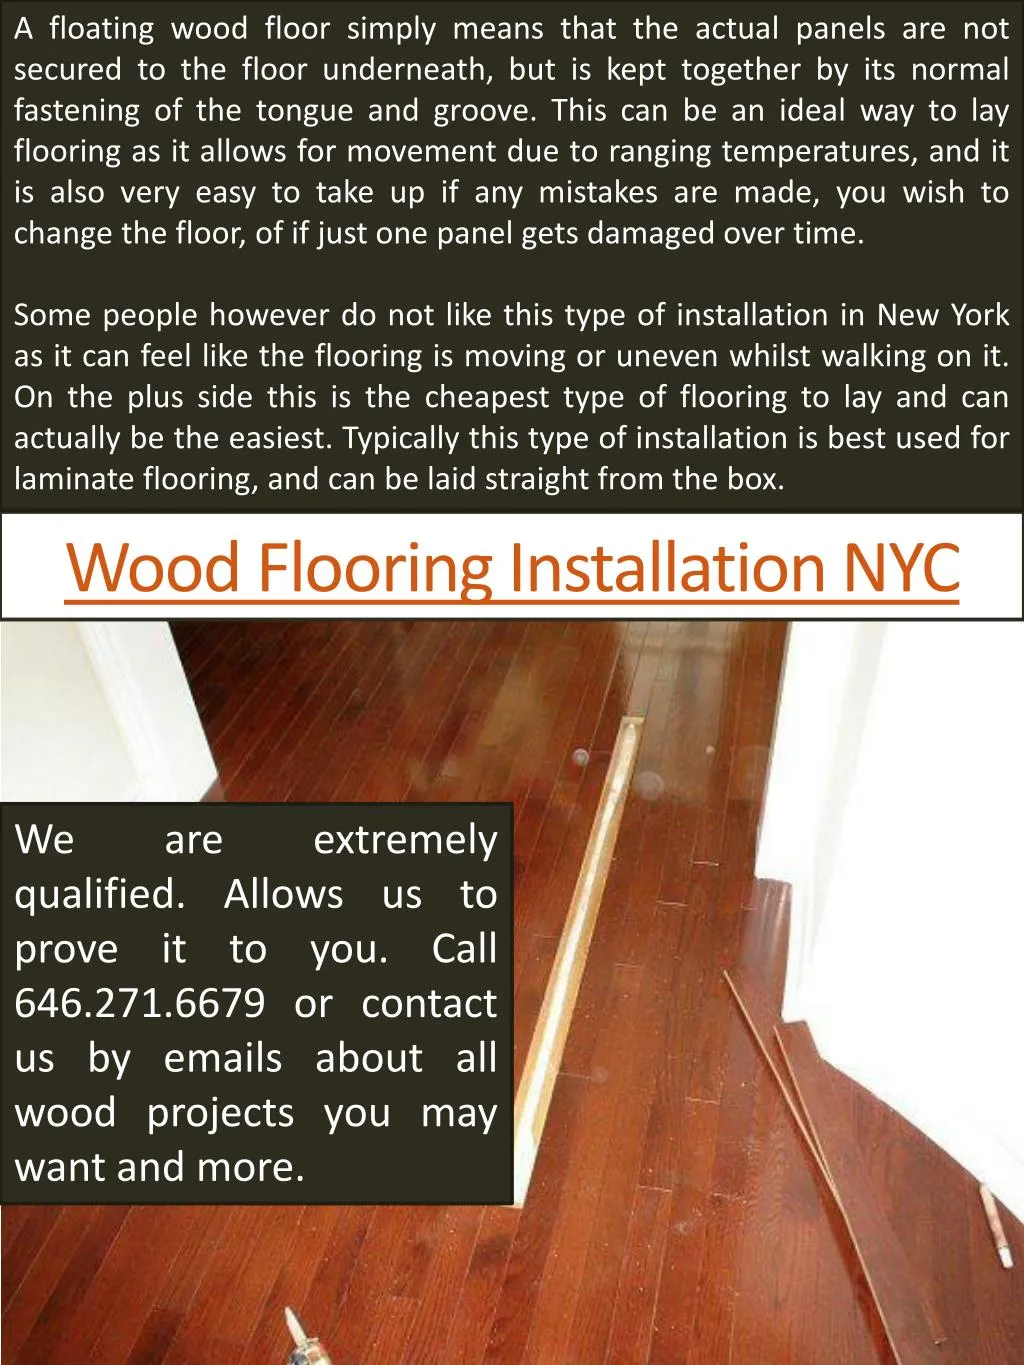 wood flooring installation nyc